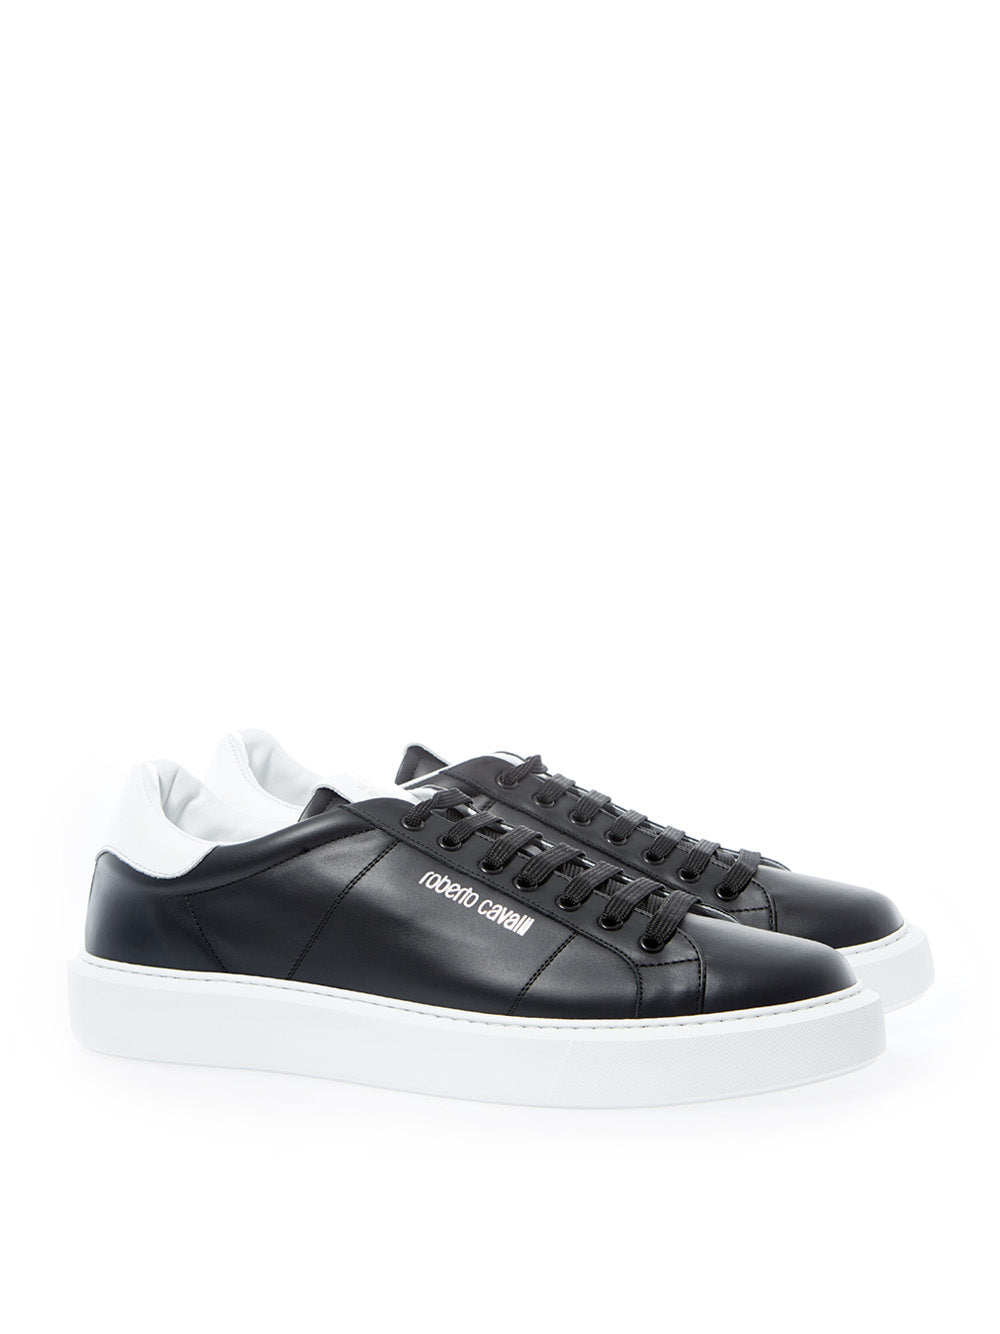 Roberto Cavalli Black Leather Sneakers with Silver Logo | Fashionsarah.com